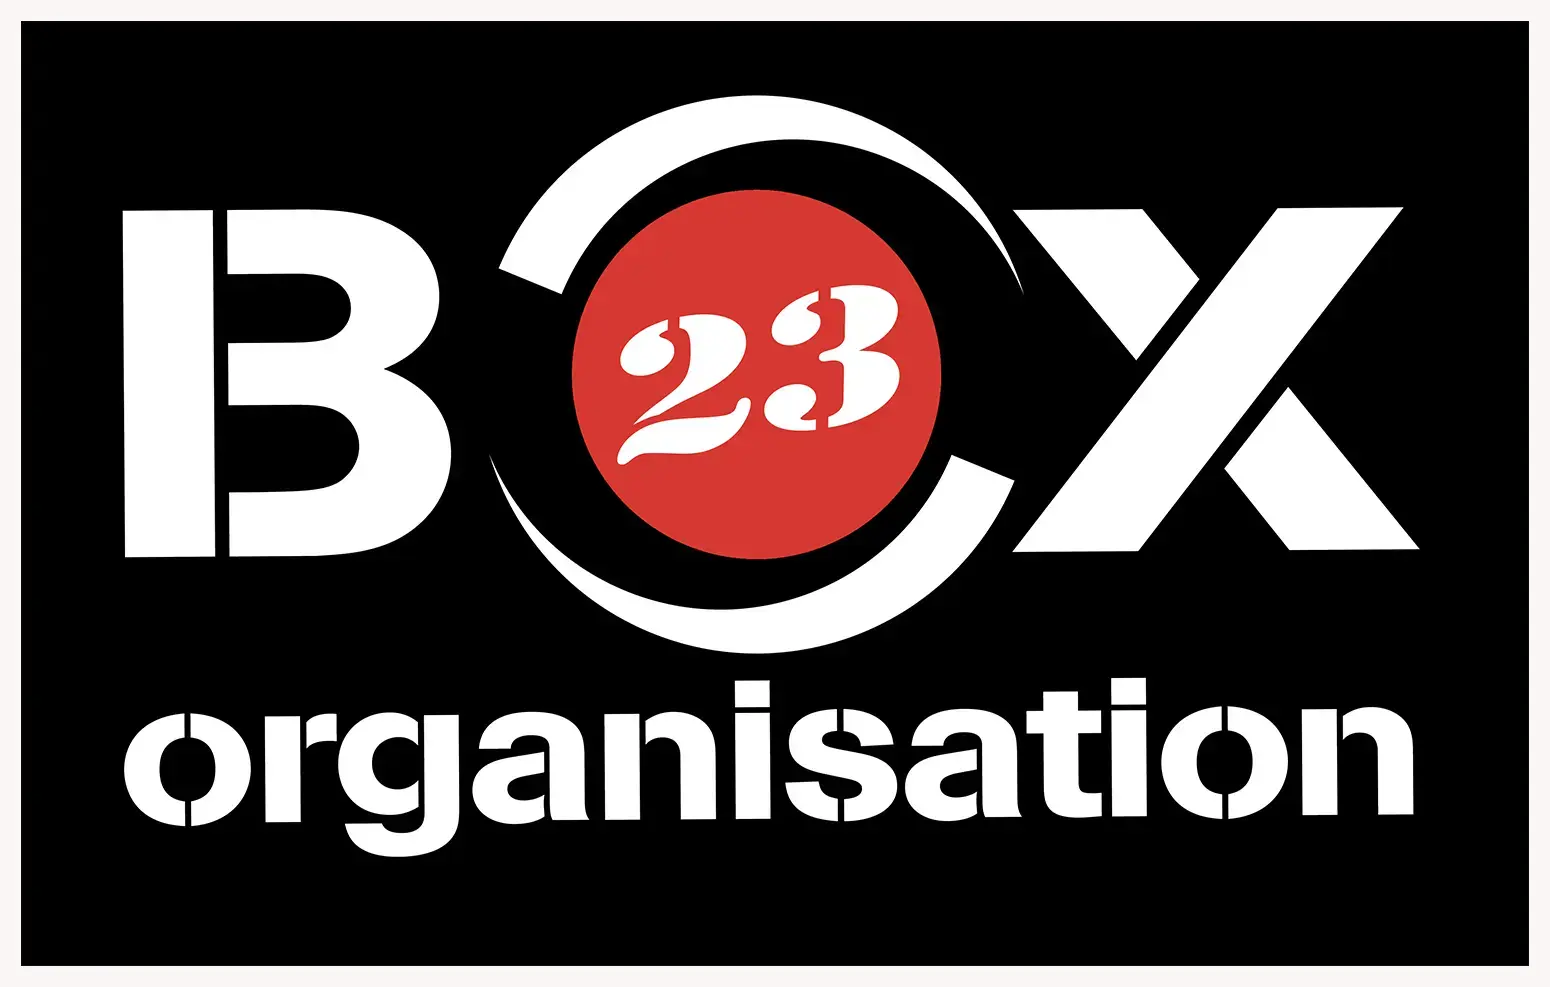 BOX23